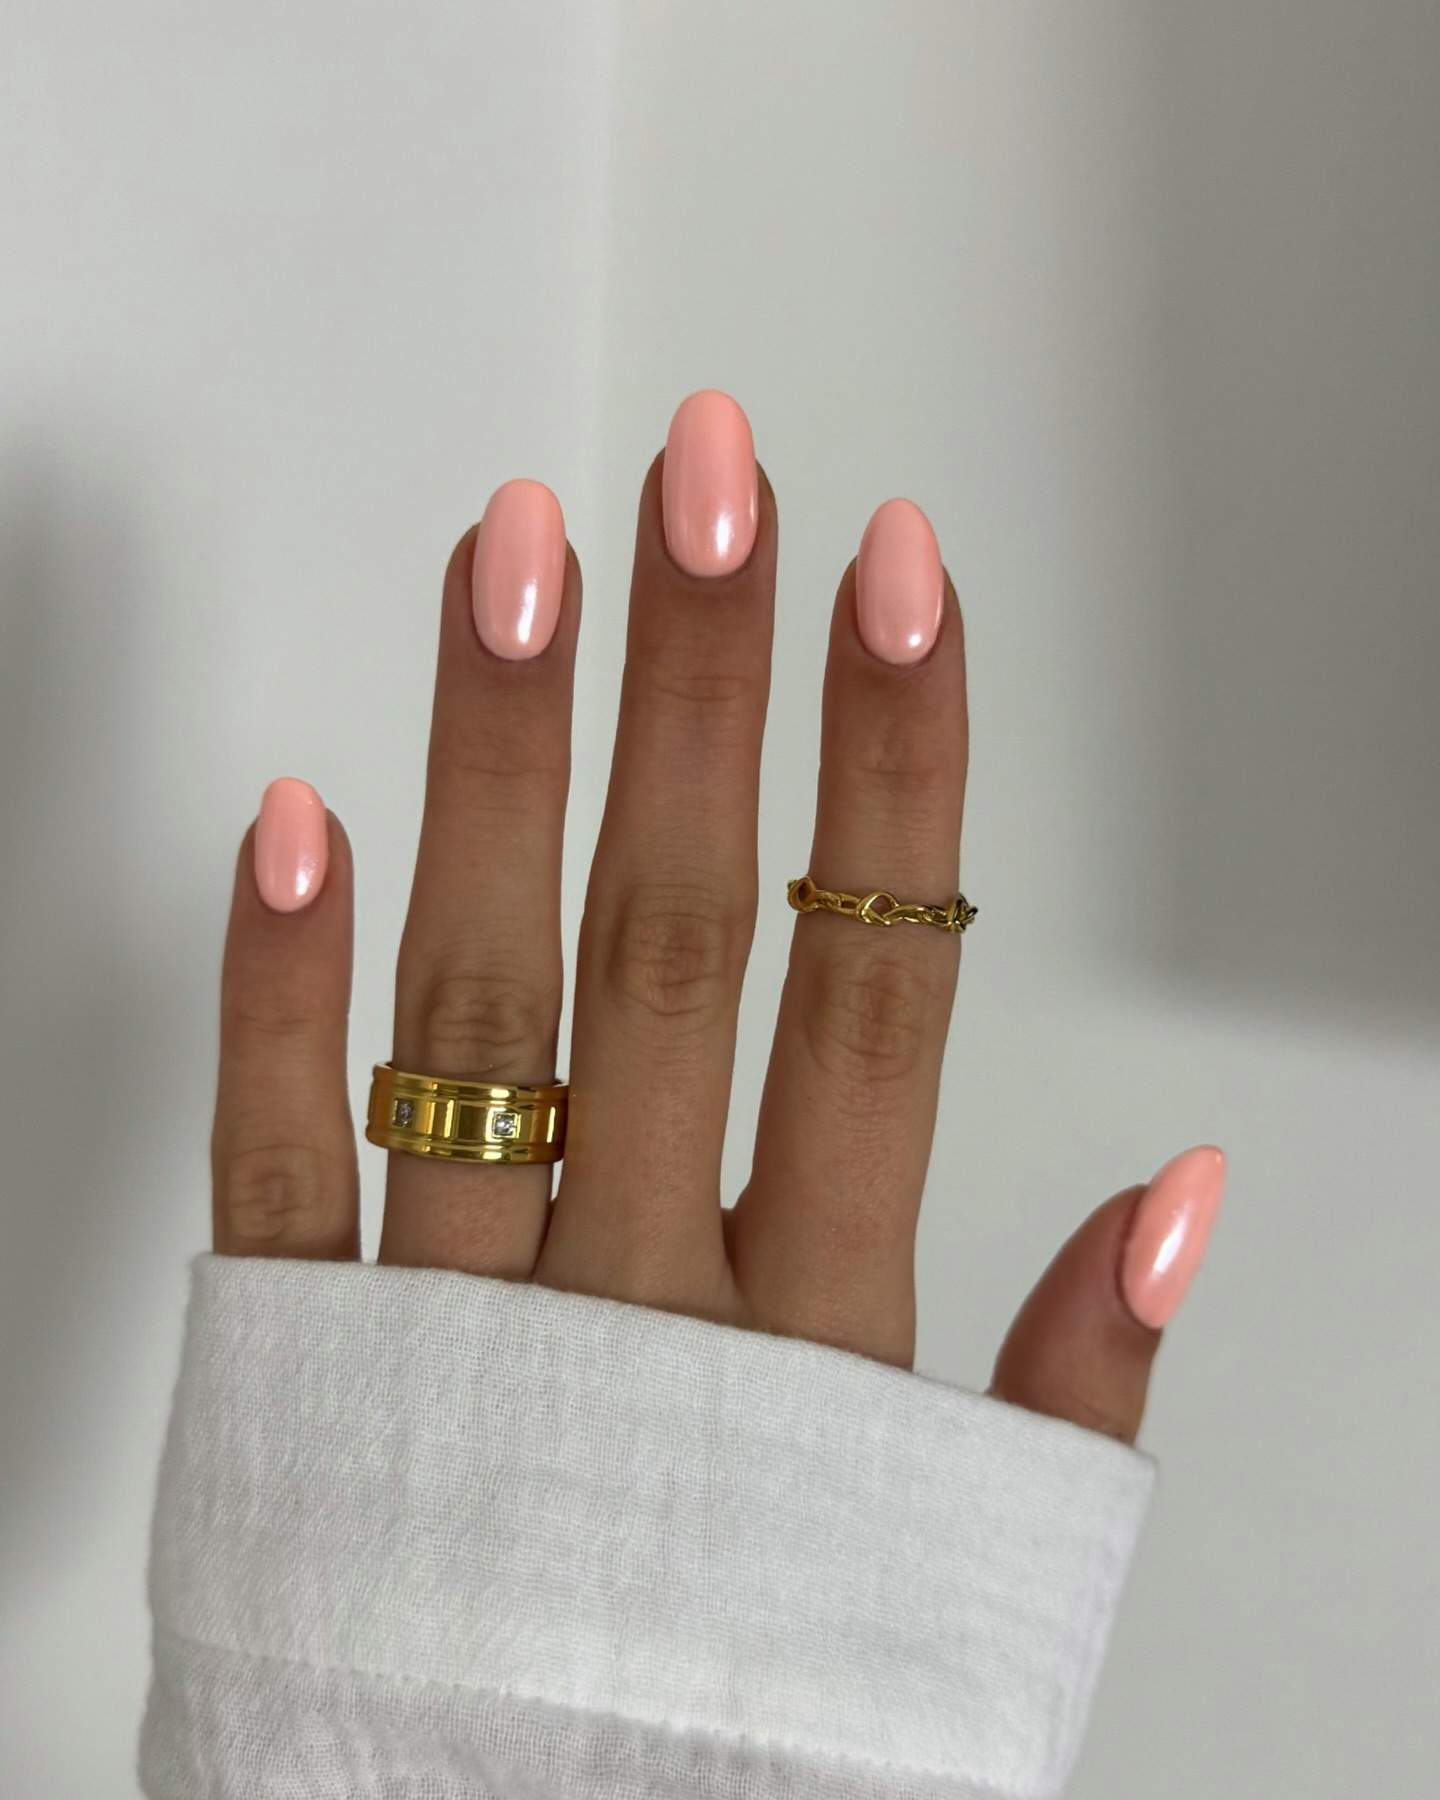 Peach nails con efecto aurora